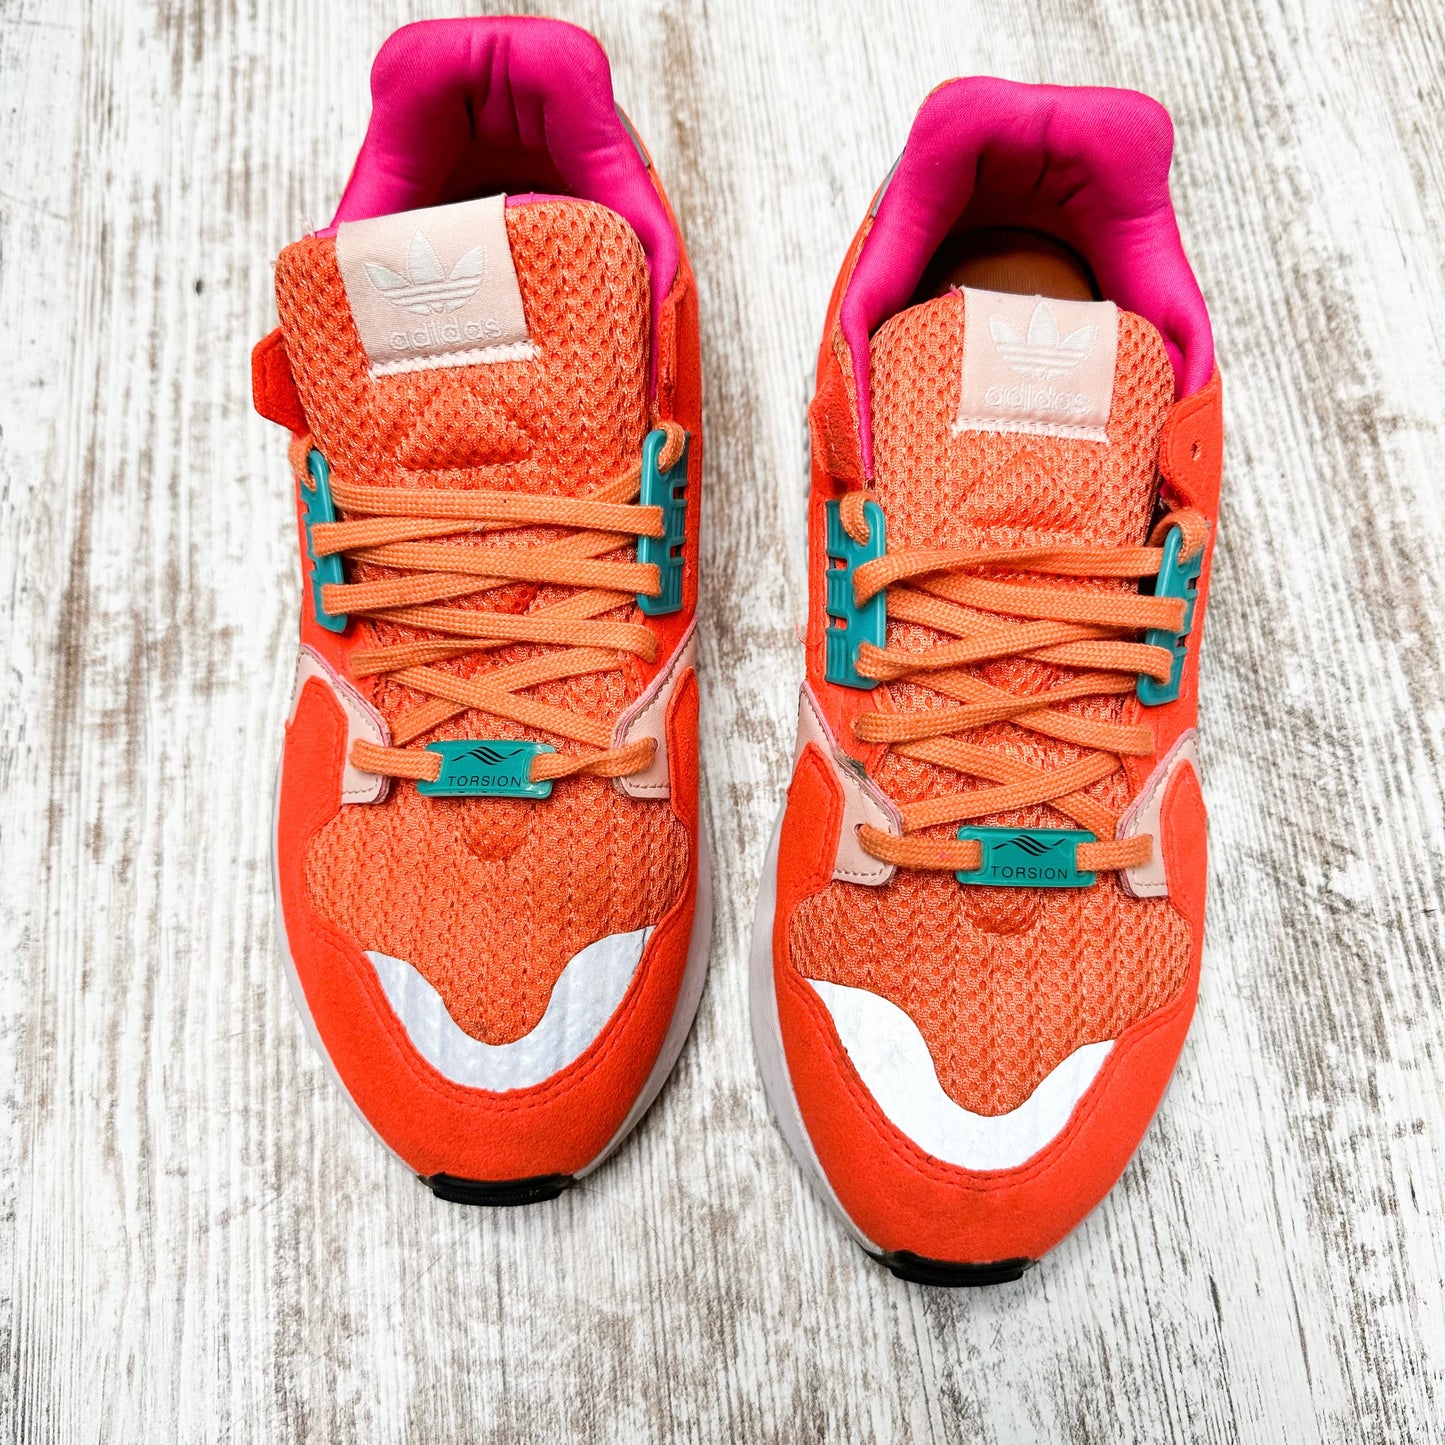 Adidas ZX Torsion Coral Orange / Teal Sneaker Size 8.5